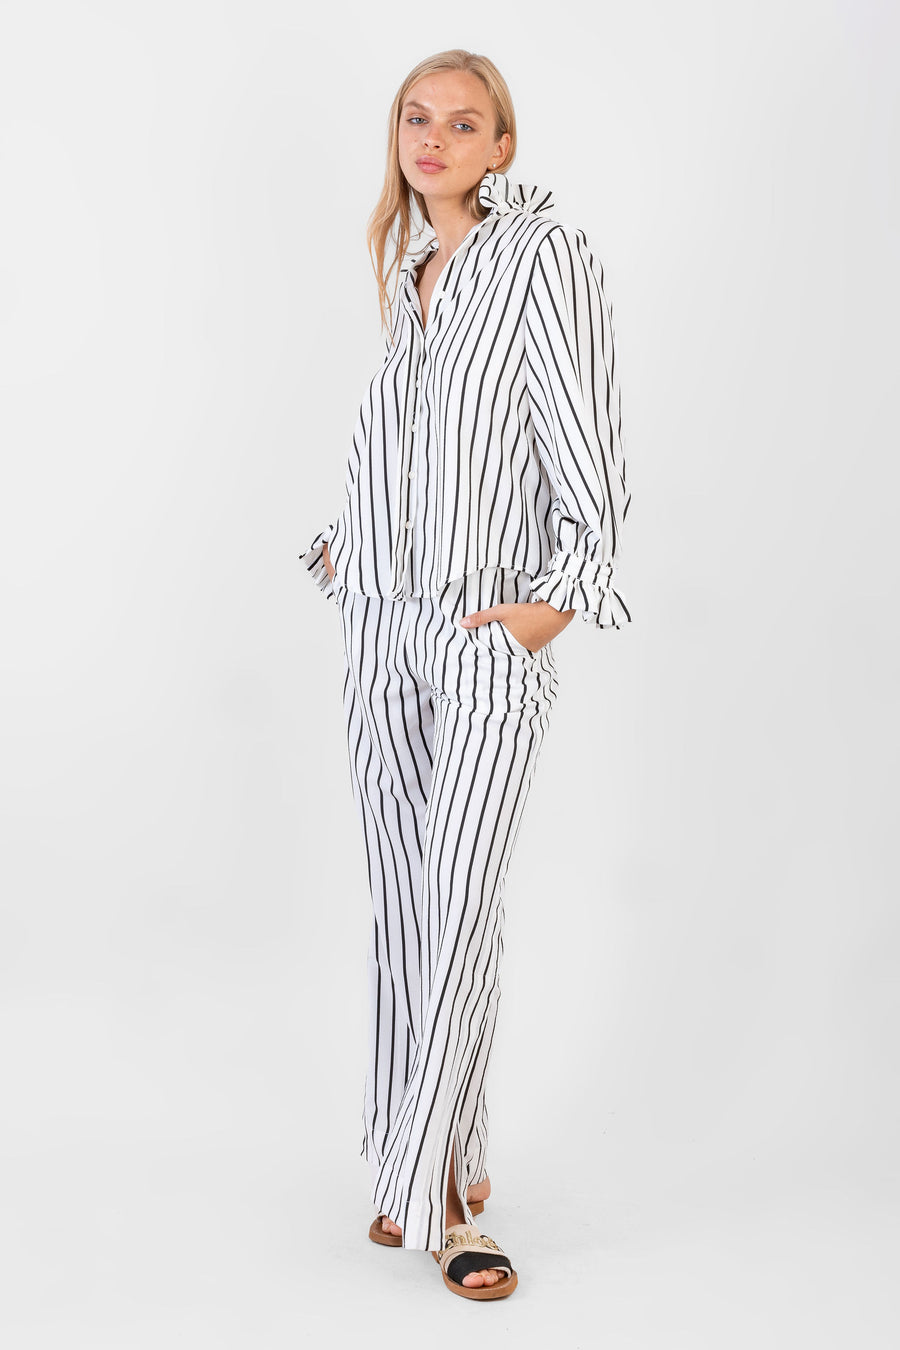 Phoebe Top Black & White Stripe